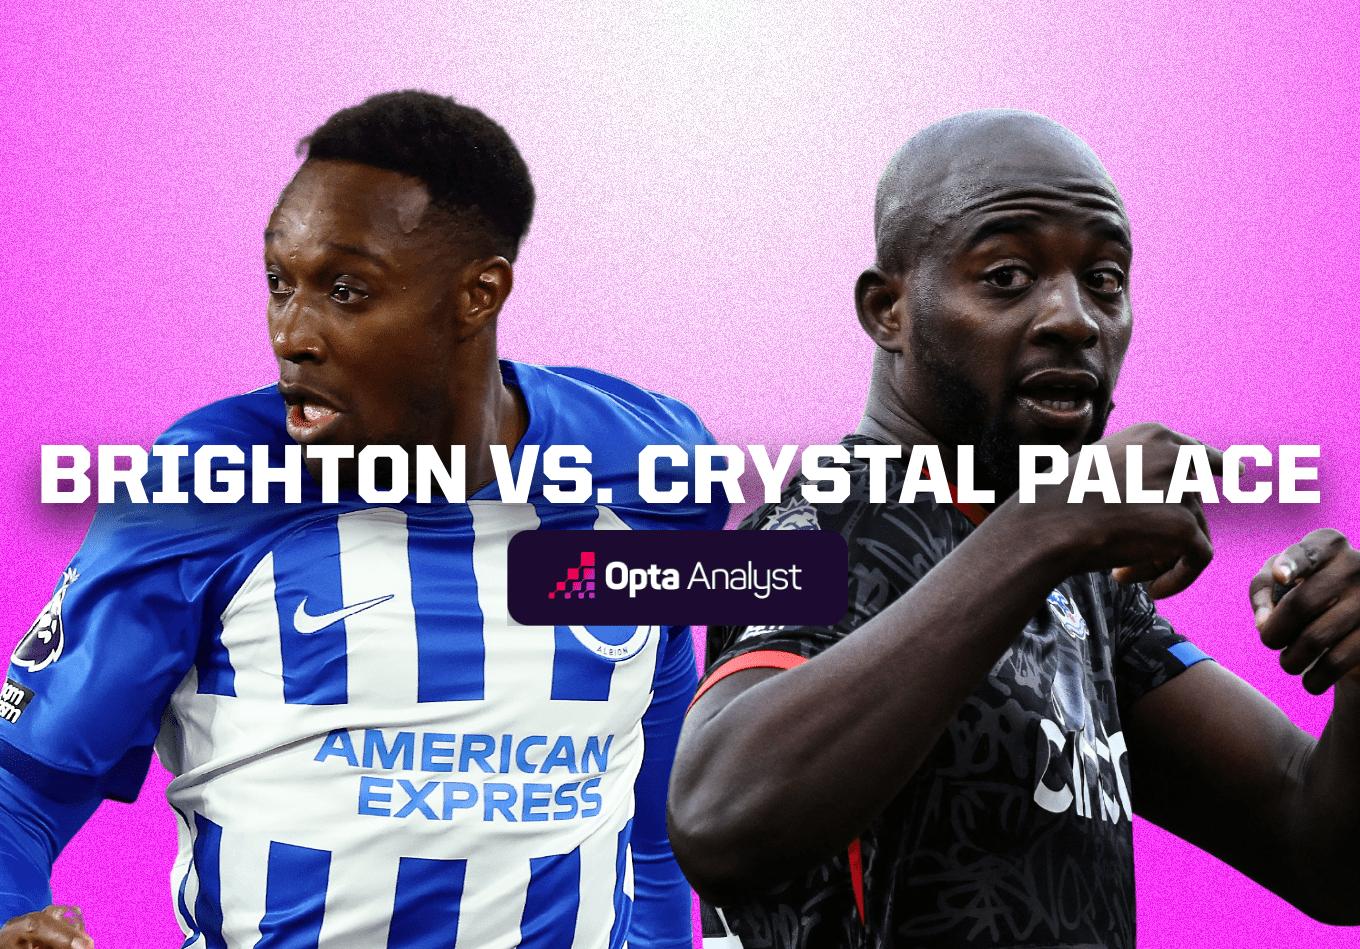 Brighton vs Crystal Palace: Prediction and Preview